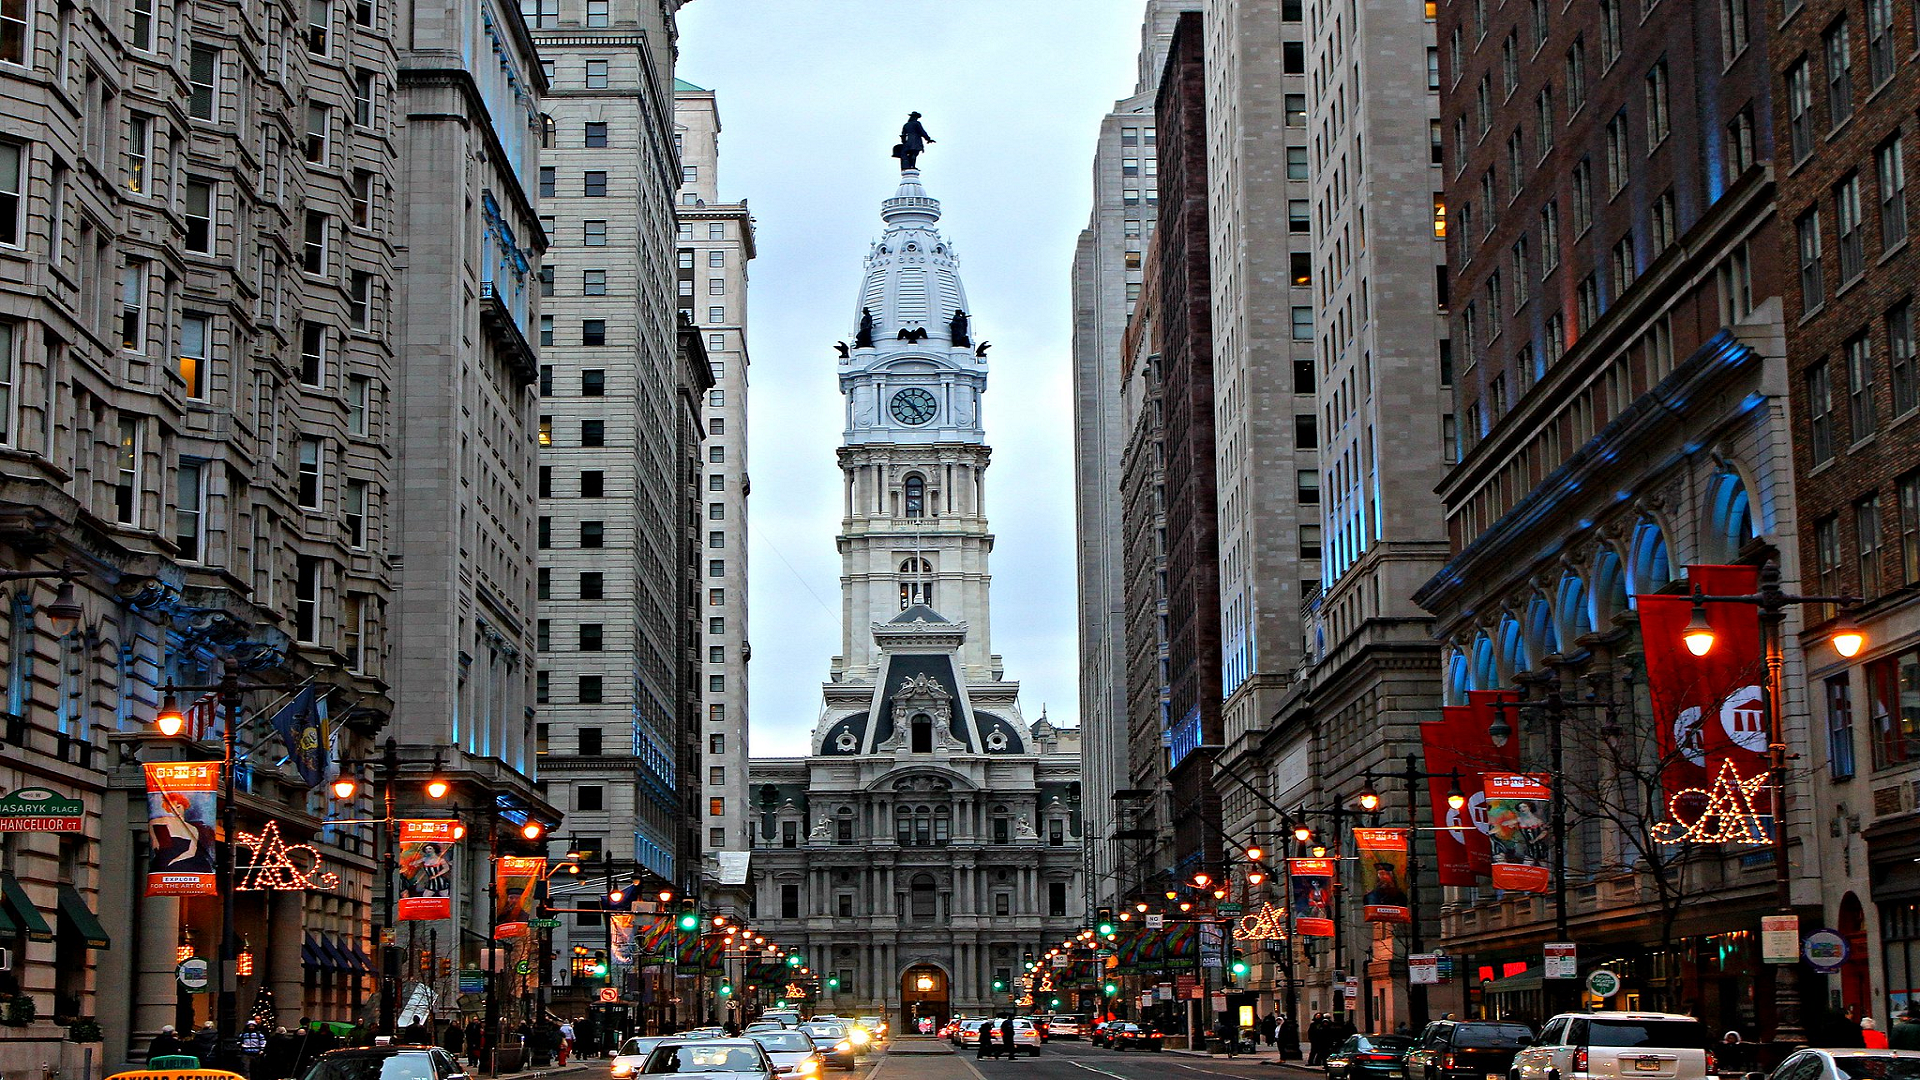 The Philadelphia City Immersion